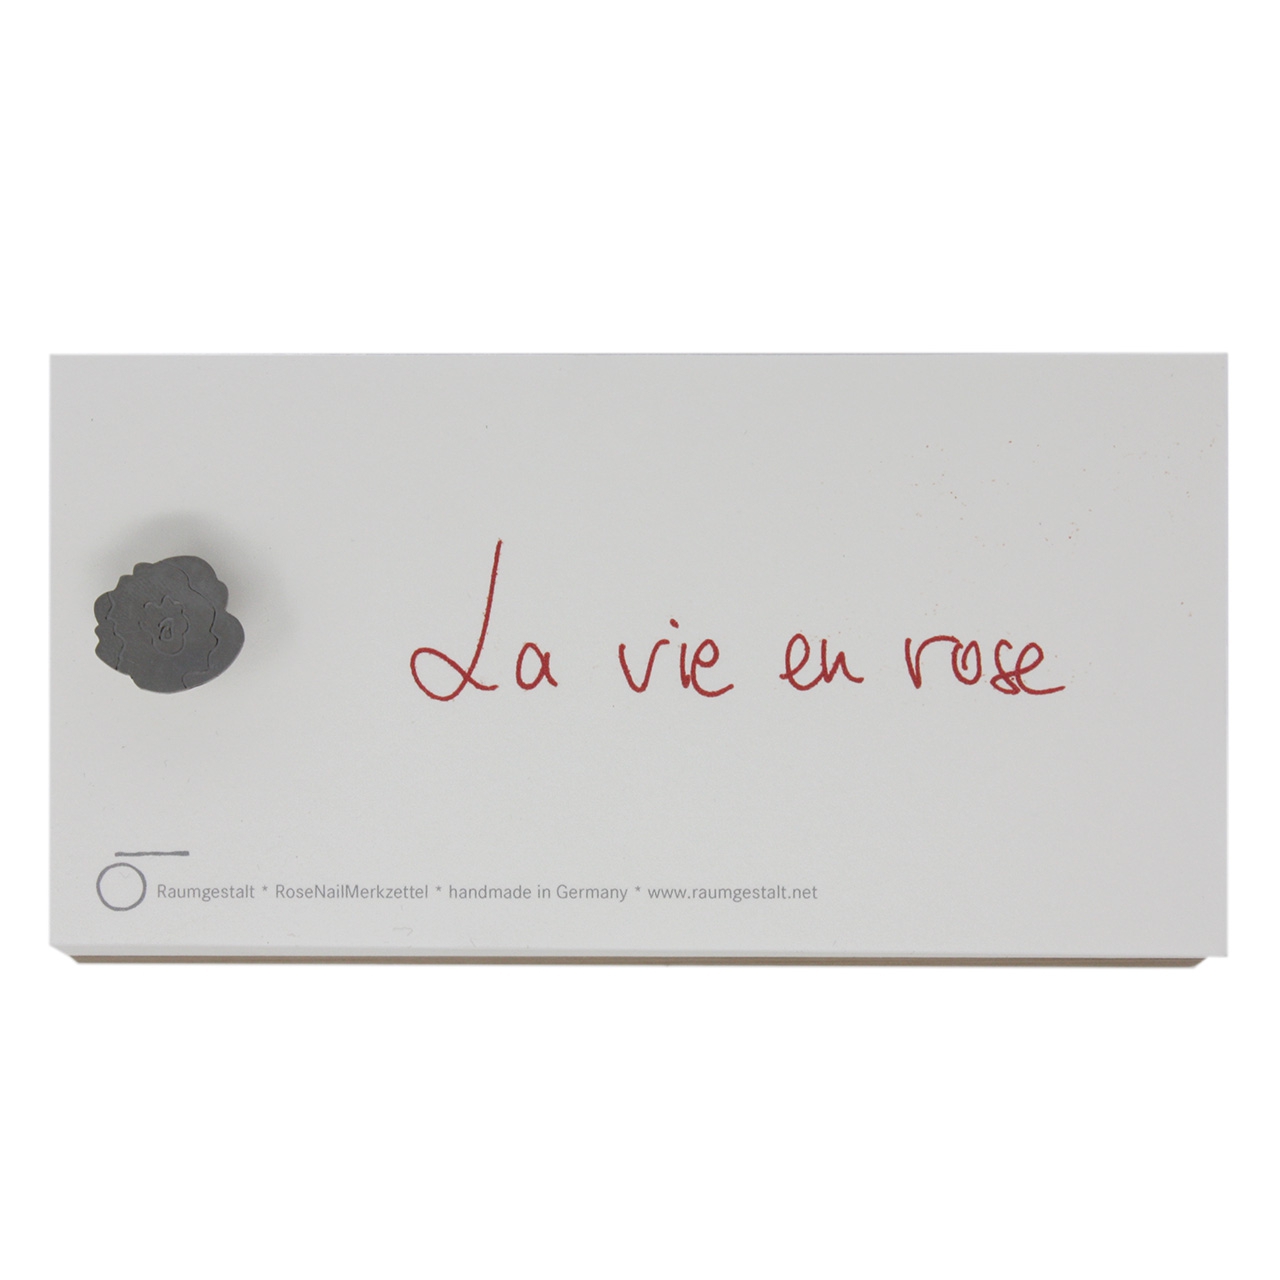 Raumgestalt RoseNail " La vie en rose" Merkzettel in der Box, ca. 16,5 x 8,5 cm 